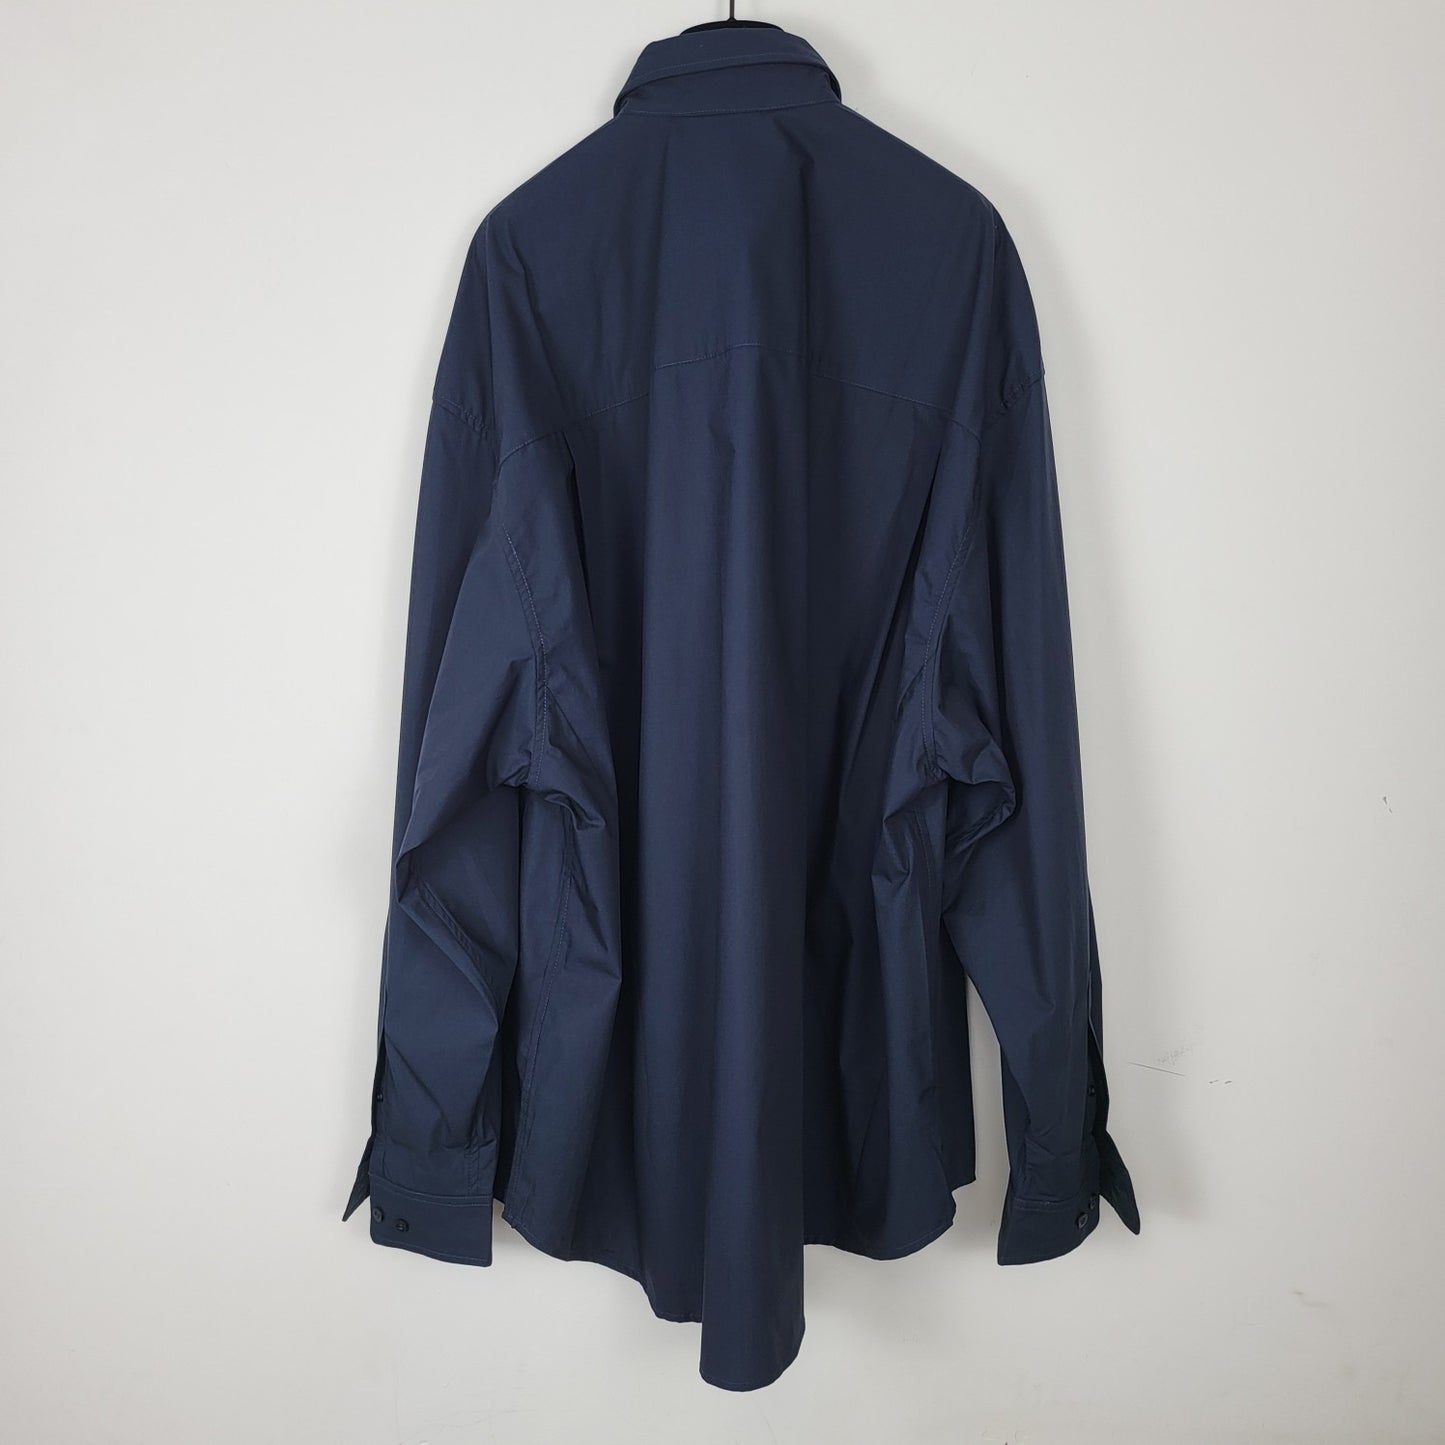 GTR / 발렌시아가 맨체스터 유나이티드 셔츠 재킷